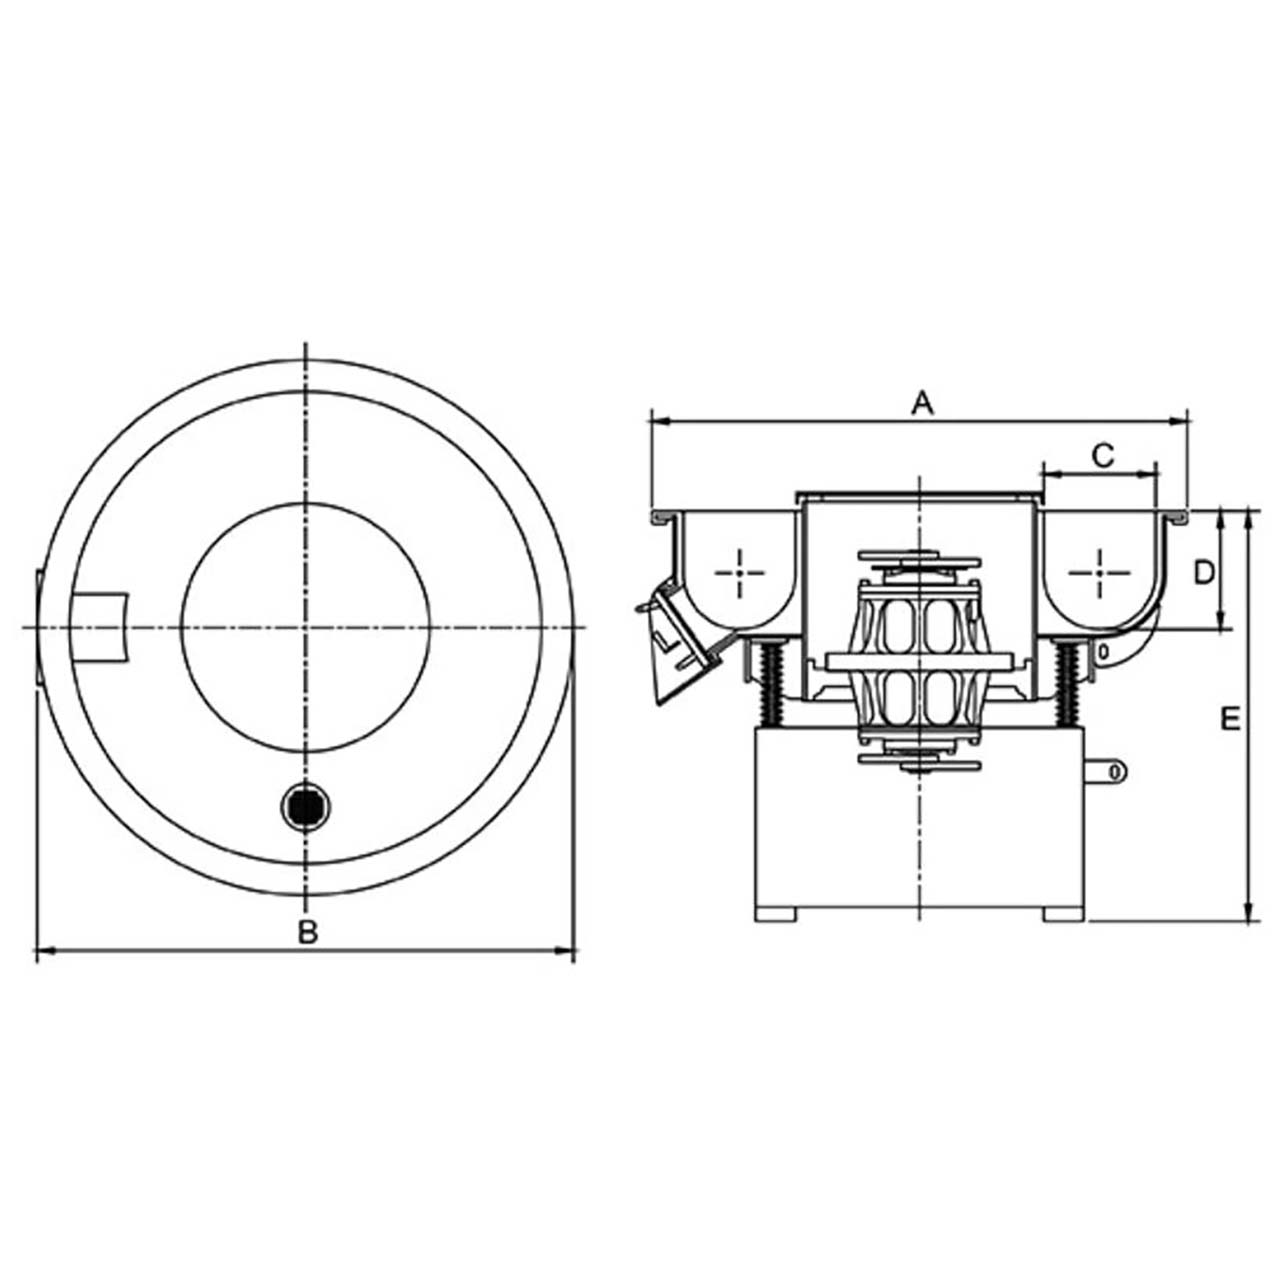 Walter Trowal S7 1 rotary vibratory finishing machine GA2229, used